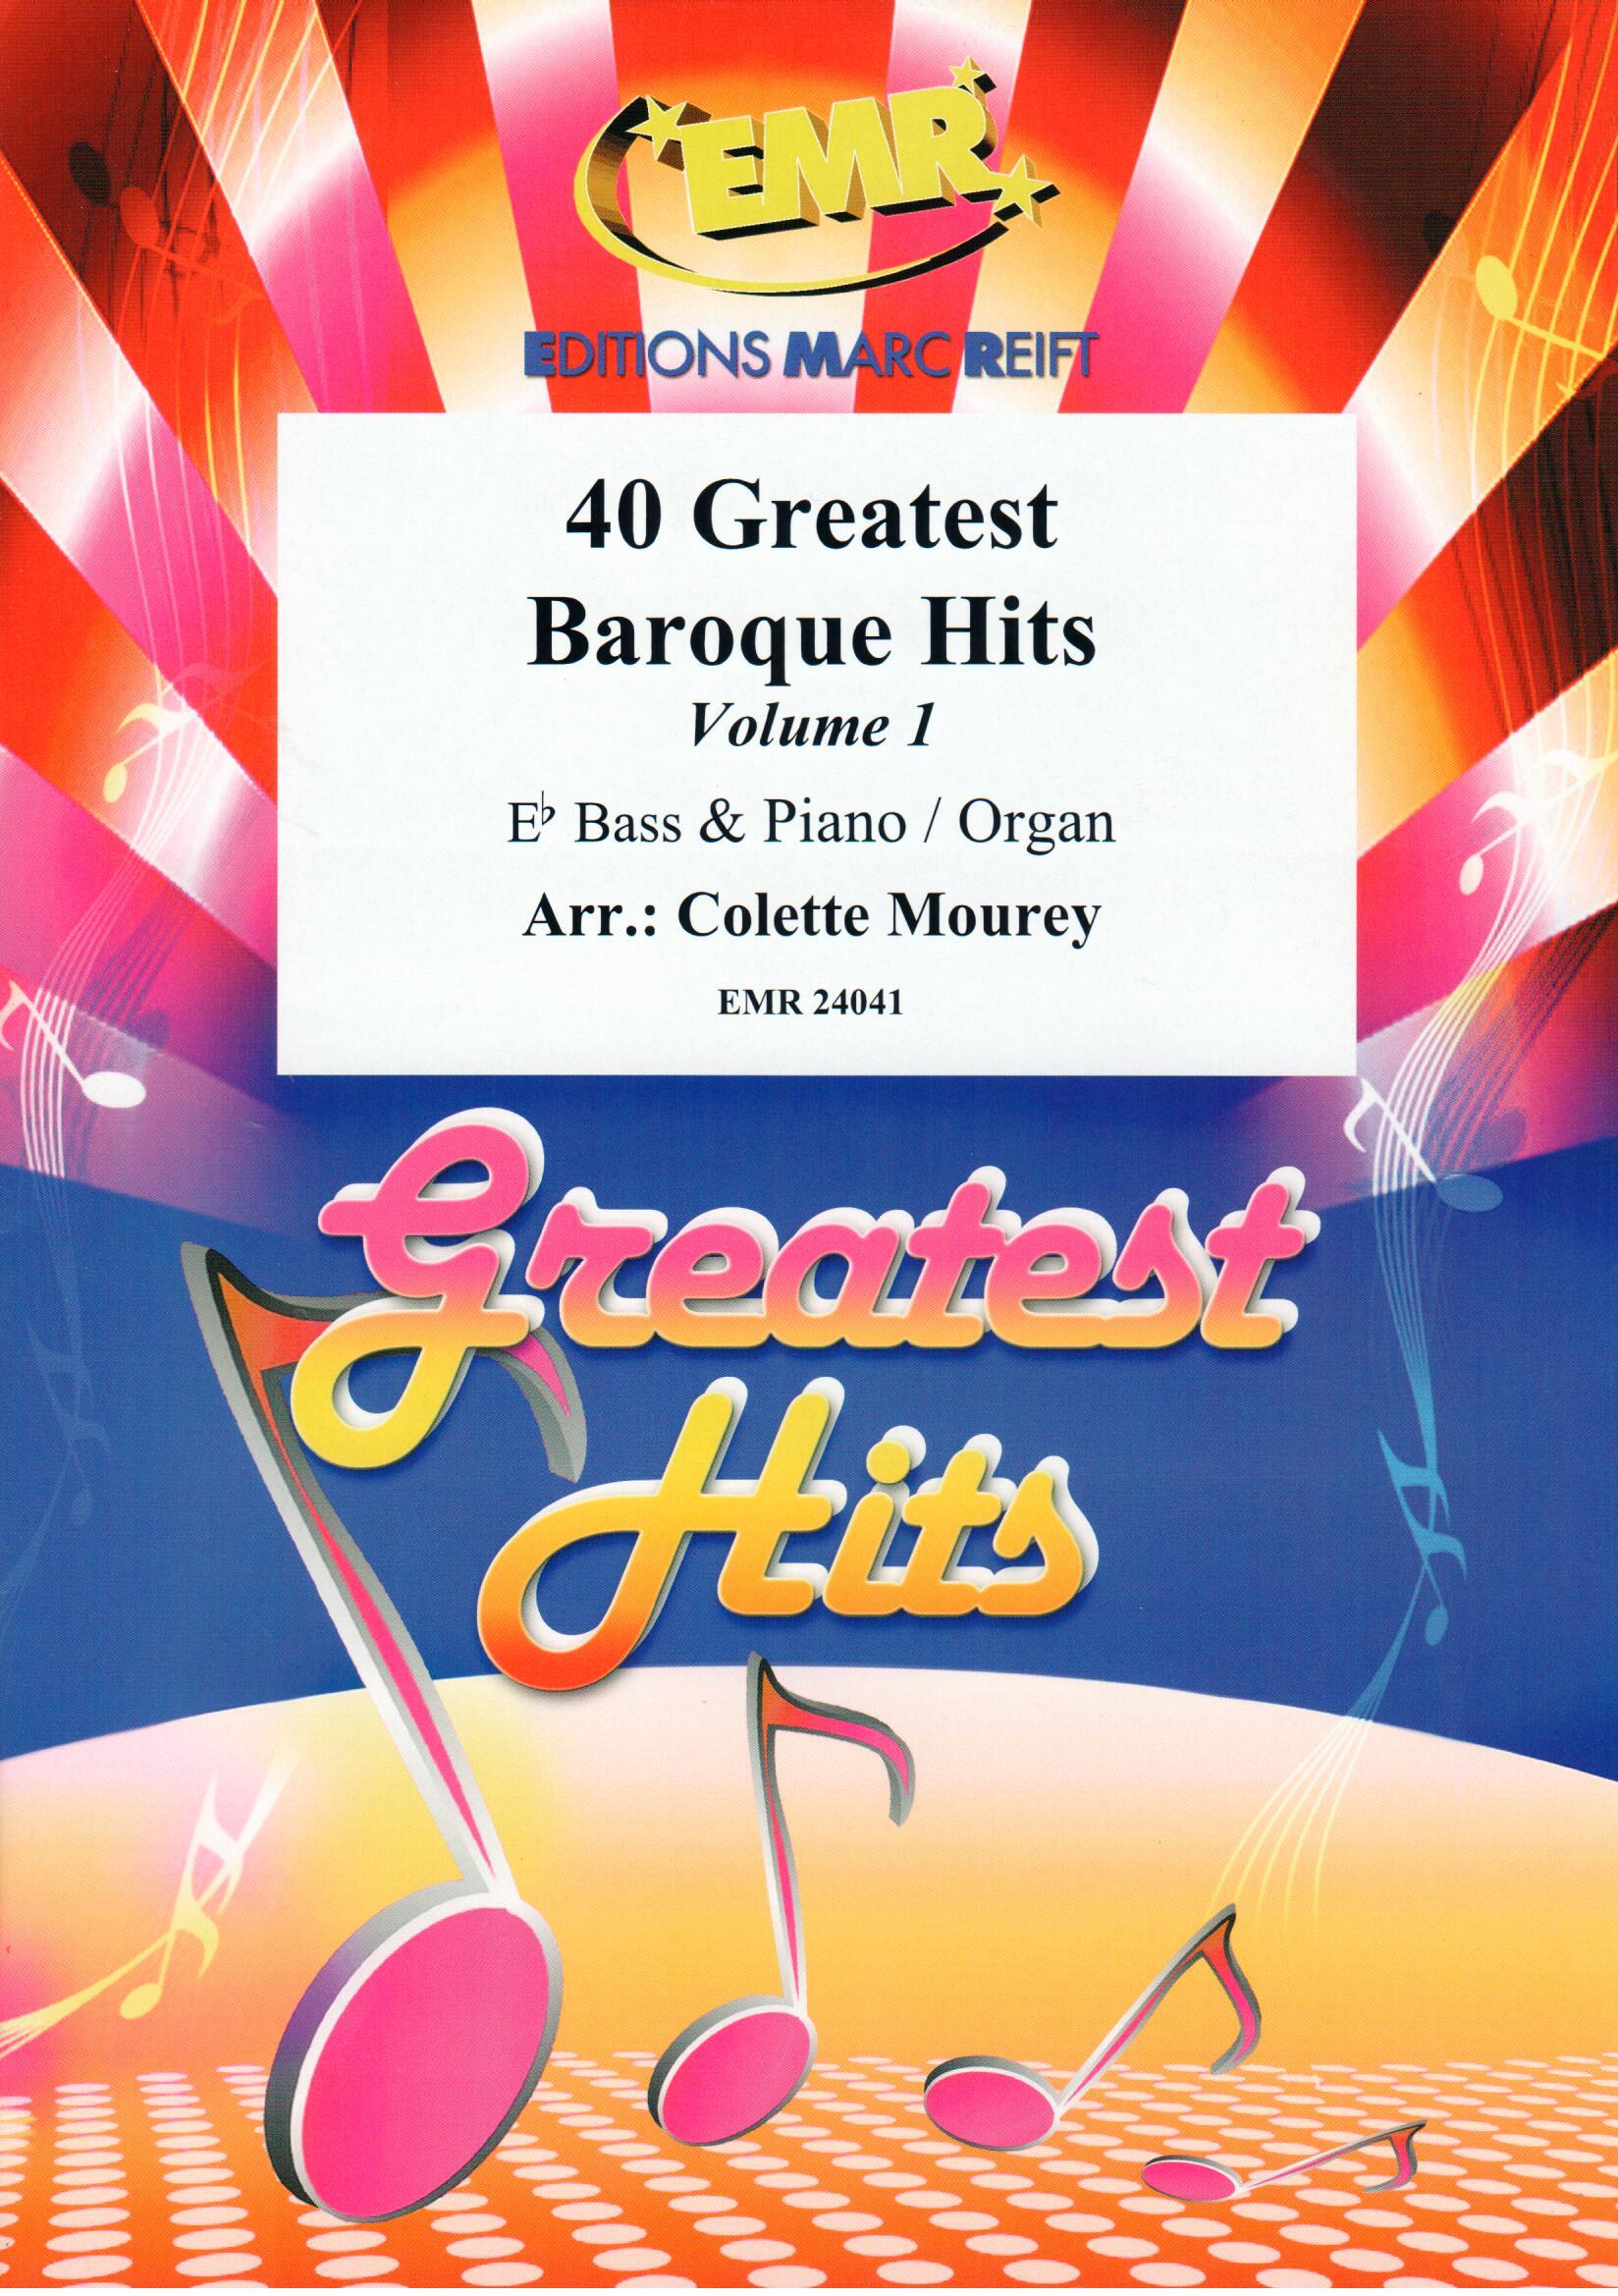 40 GREATEST BAROQUE HITS VOLUME 1, SOLOS - E♭. Bass